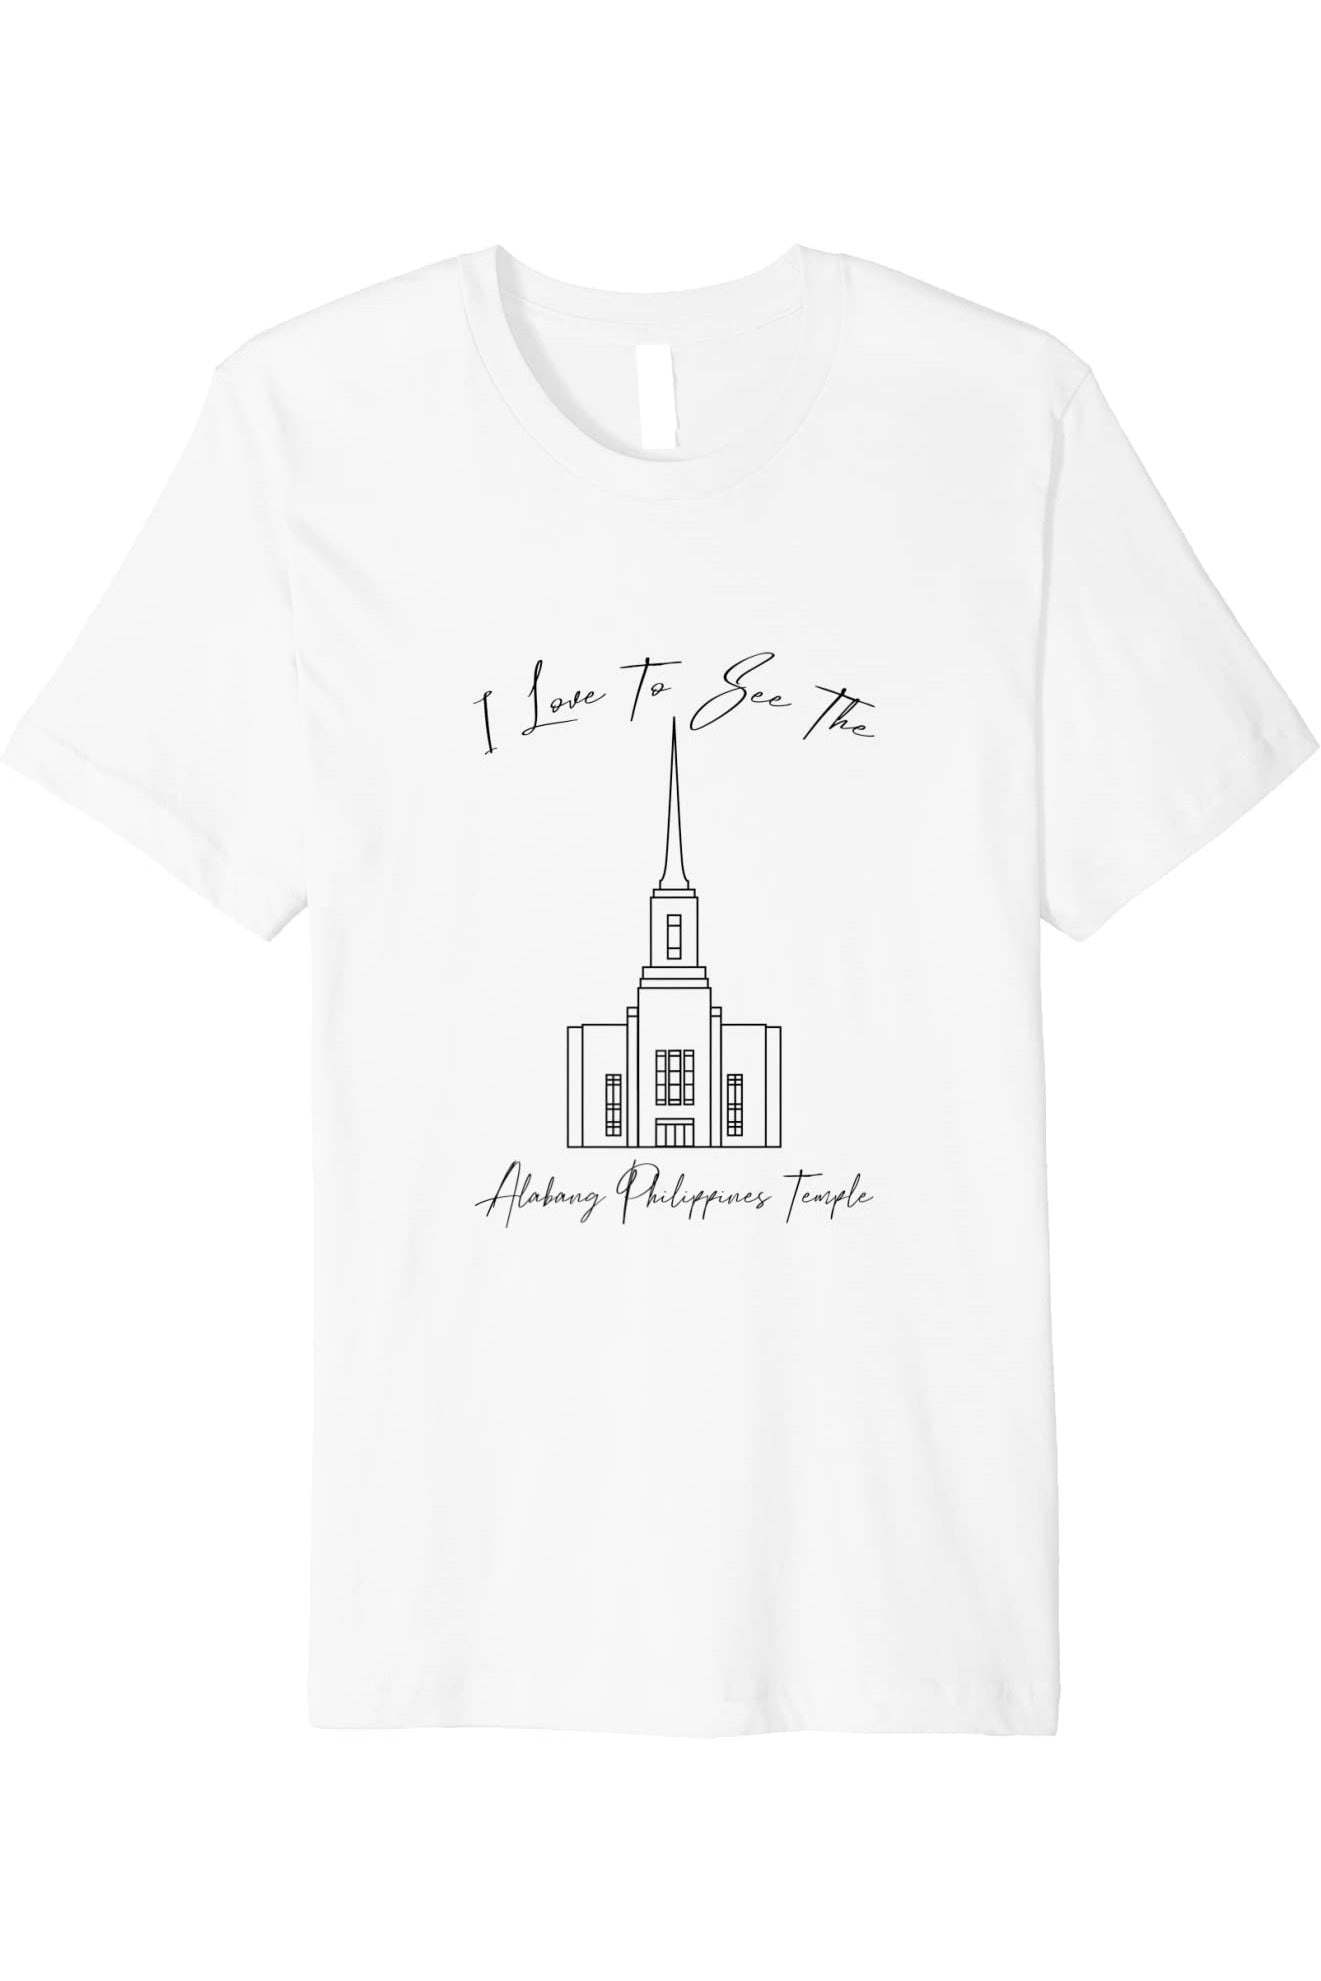 Alabang Philippines Temple T-Shirt - Premium - Calligraphy Style (English) US